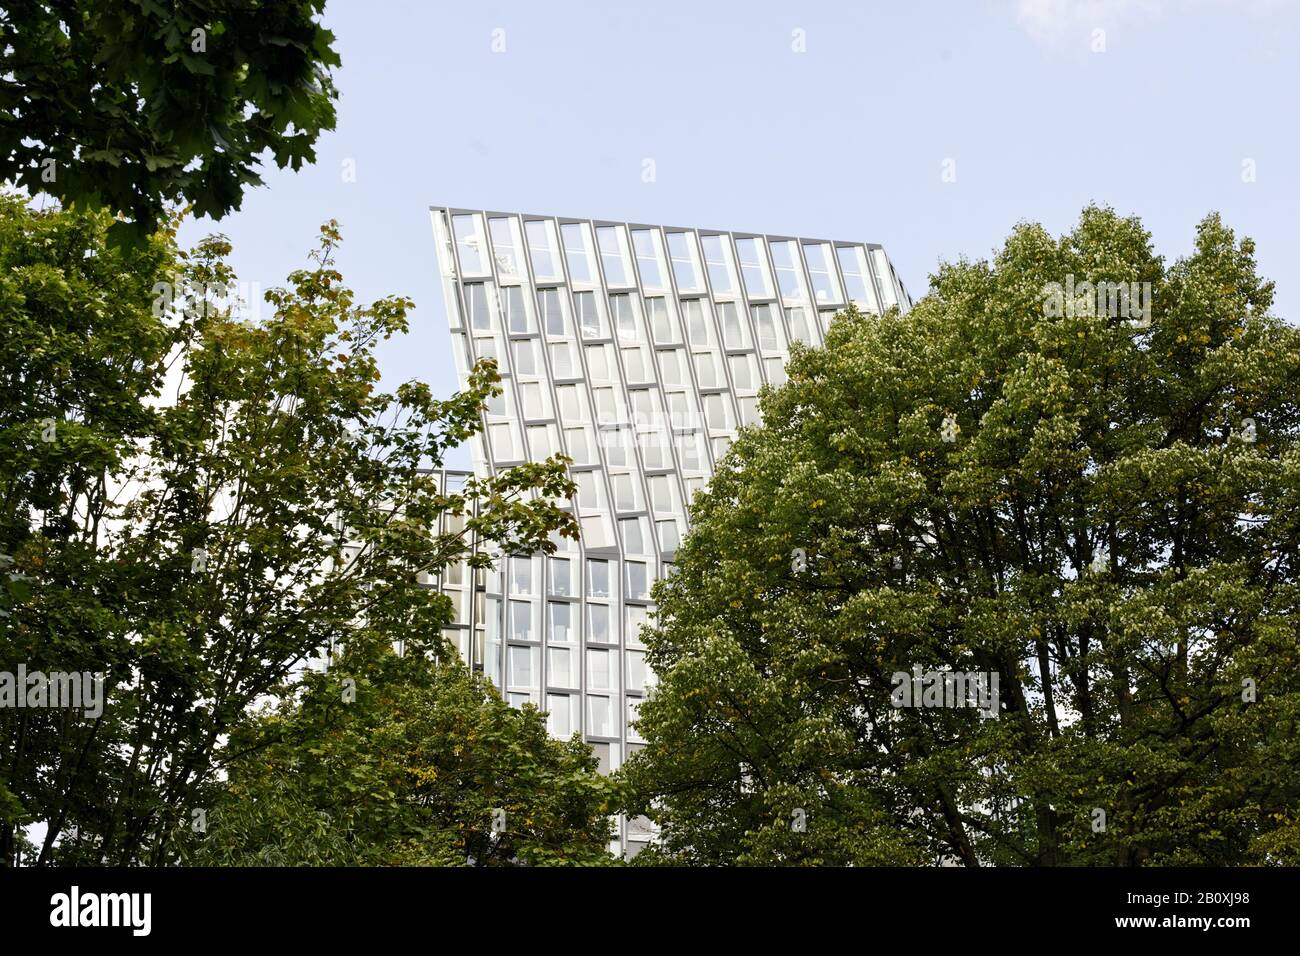 Dancing towers, modern high-rise building with 24 floors, Reeperbahn, St. Pauli, Hamburg, Germany, Stock Photo